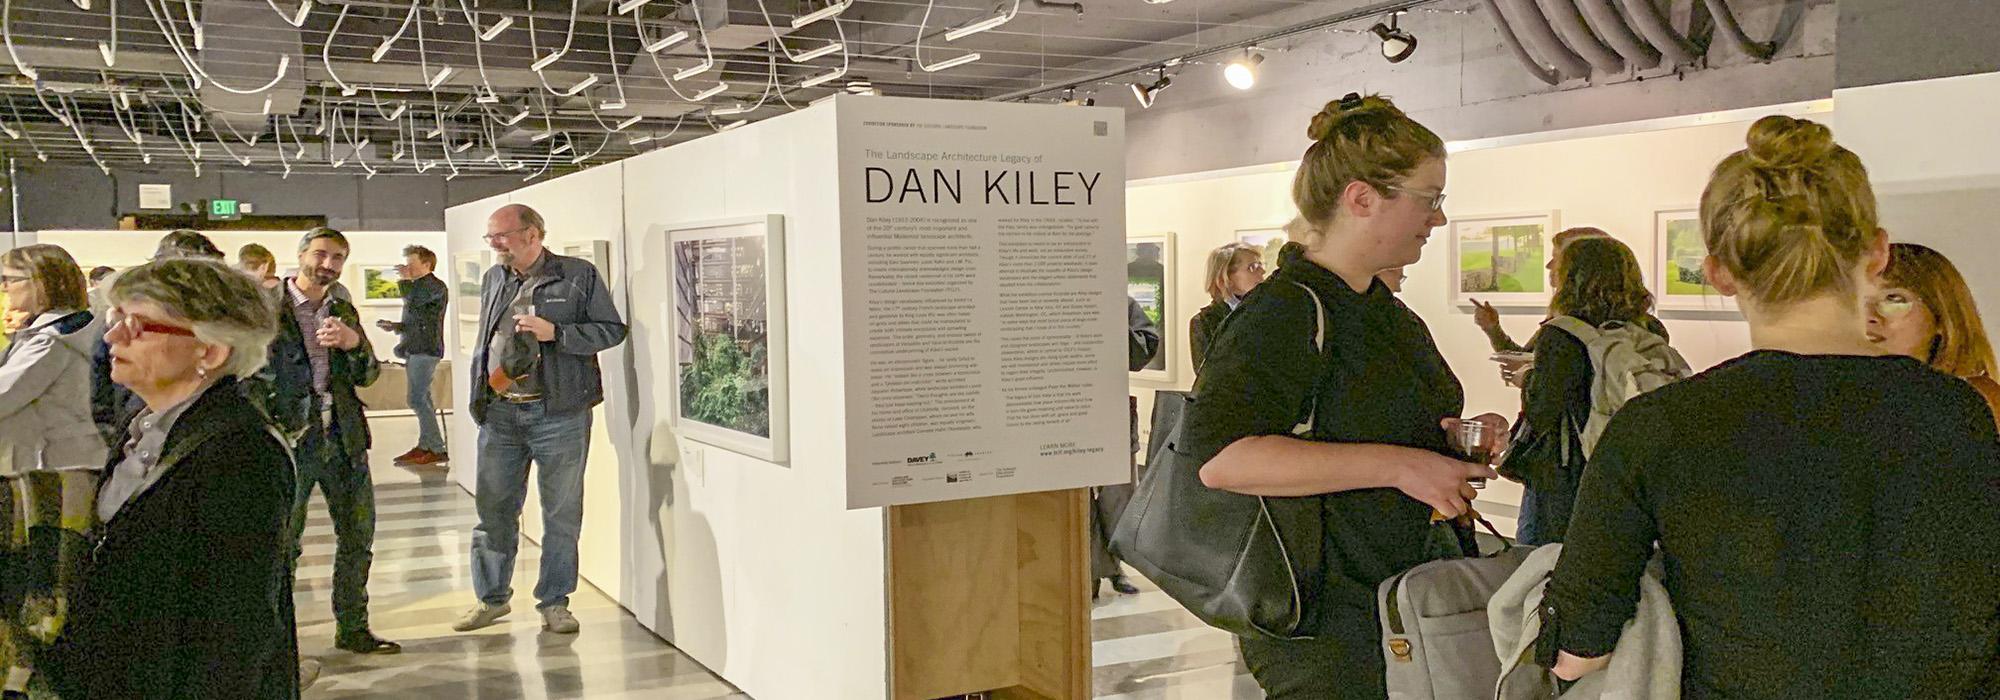 Dan Kiley Exhibition - University of California-Berkeley, Berkeley, CA